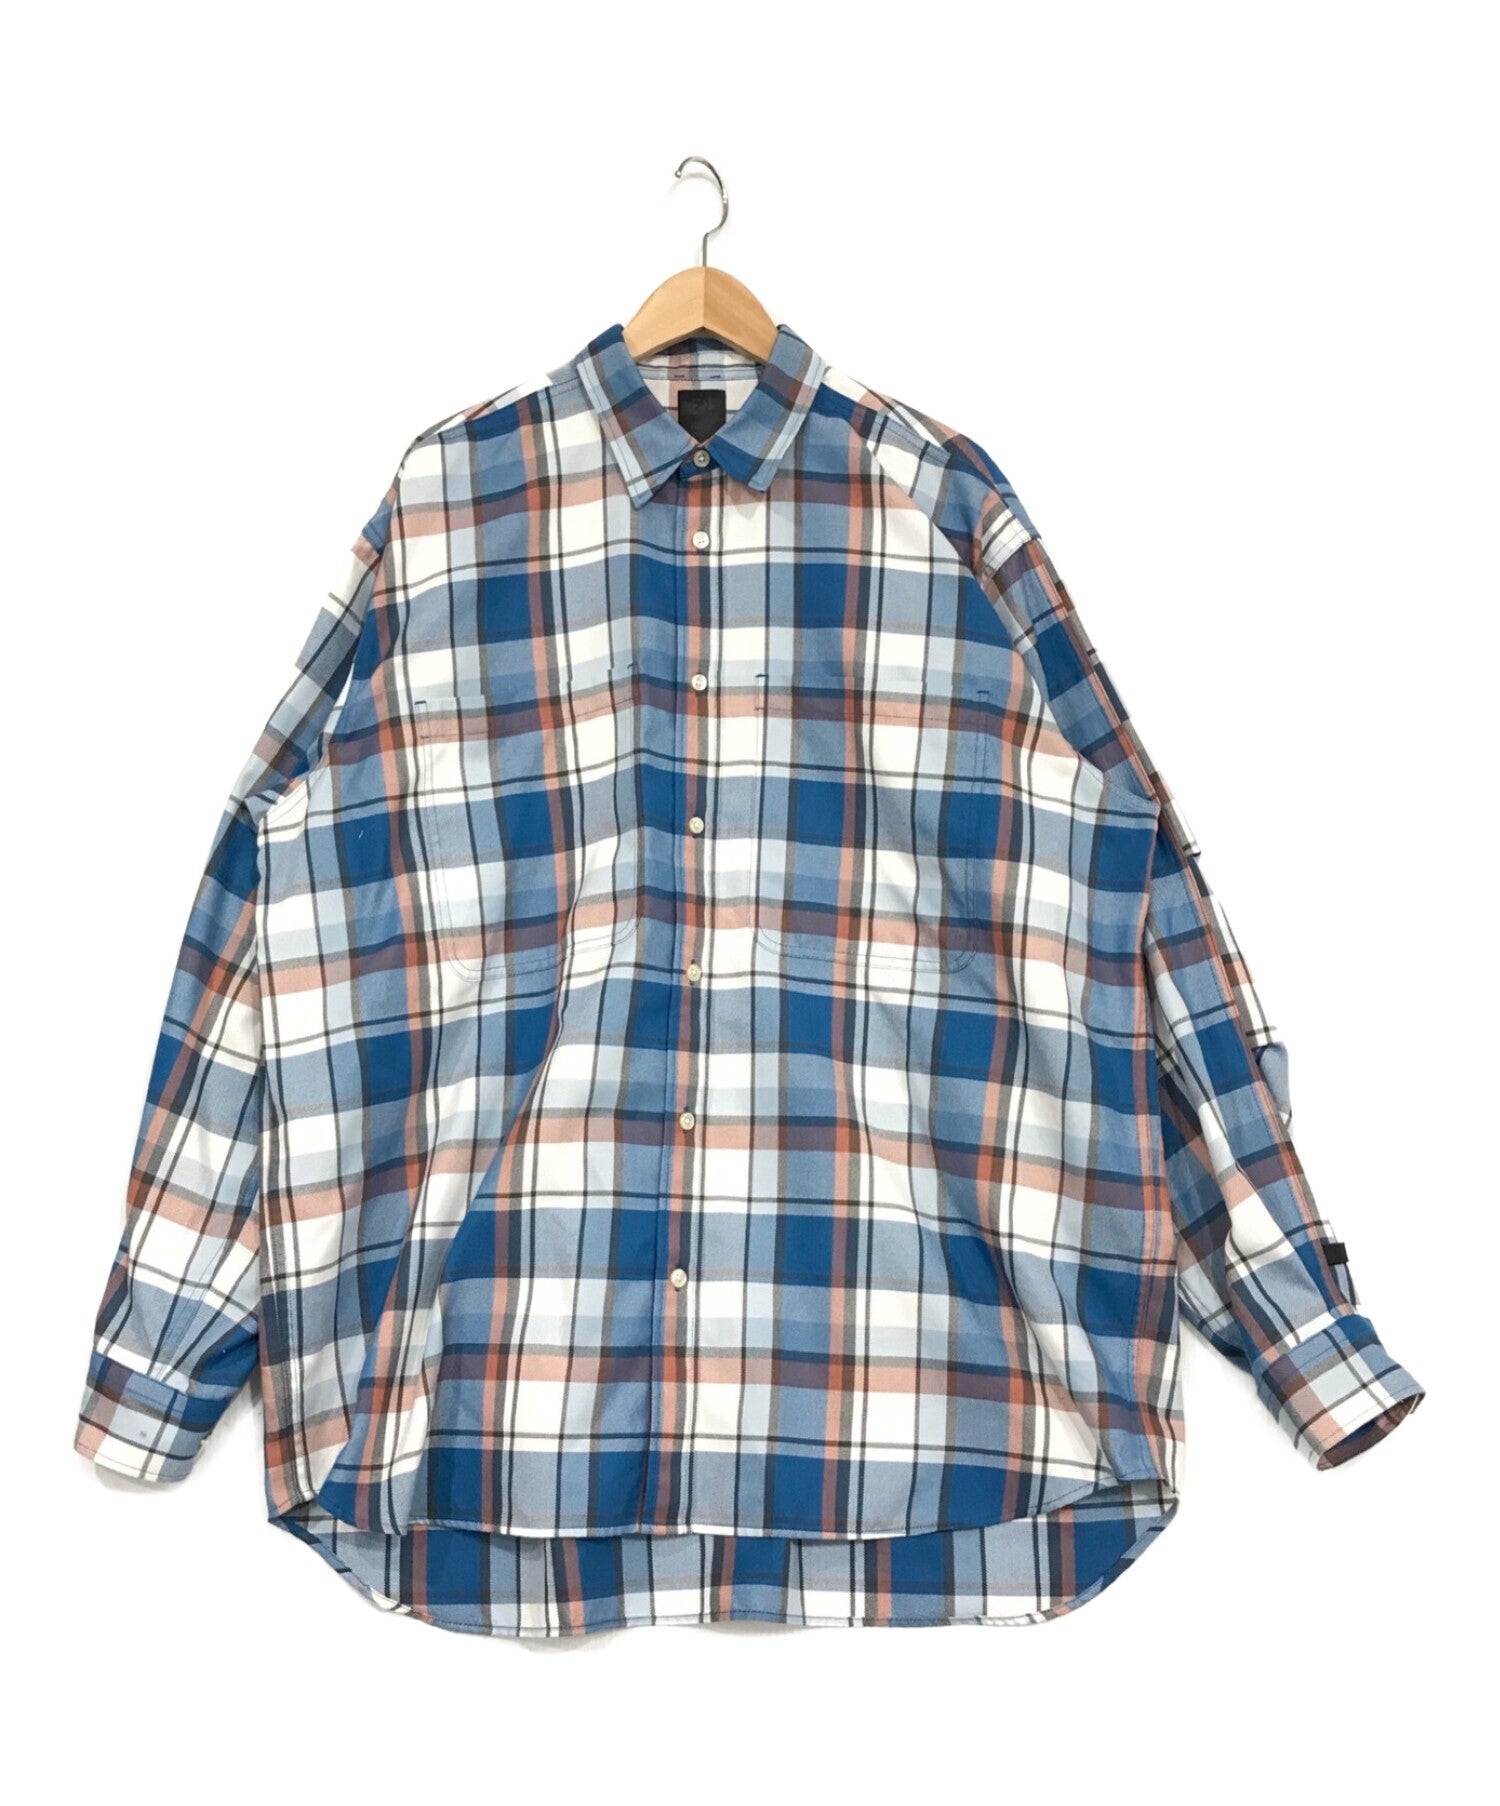 DAIWA PIER39 Tech Work Shirts Flannel Plaids BE-88022